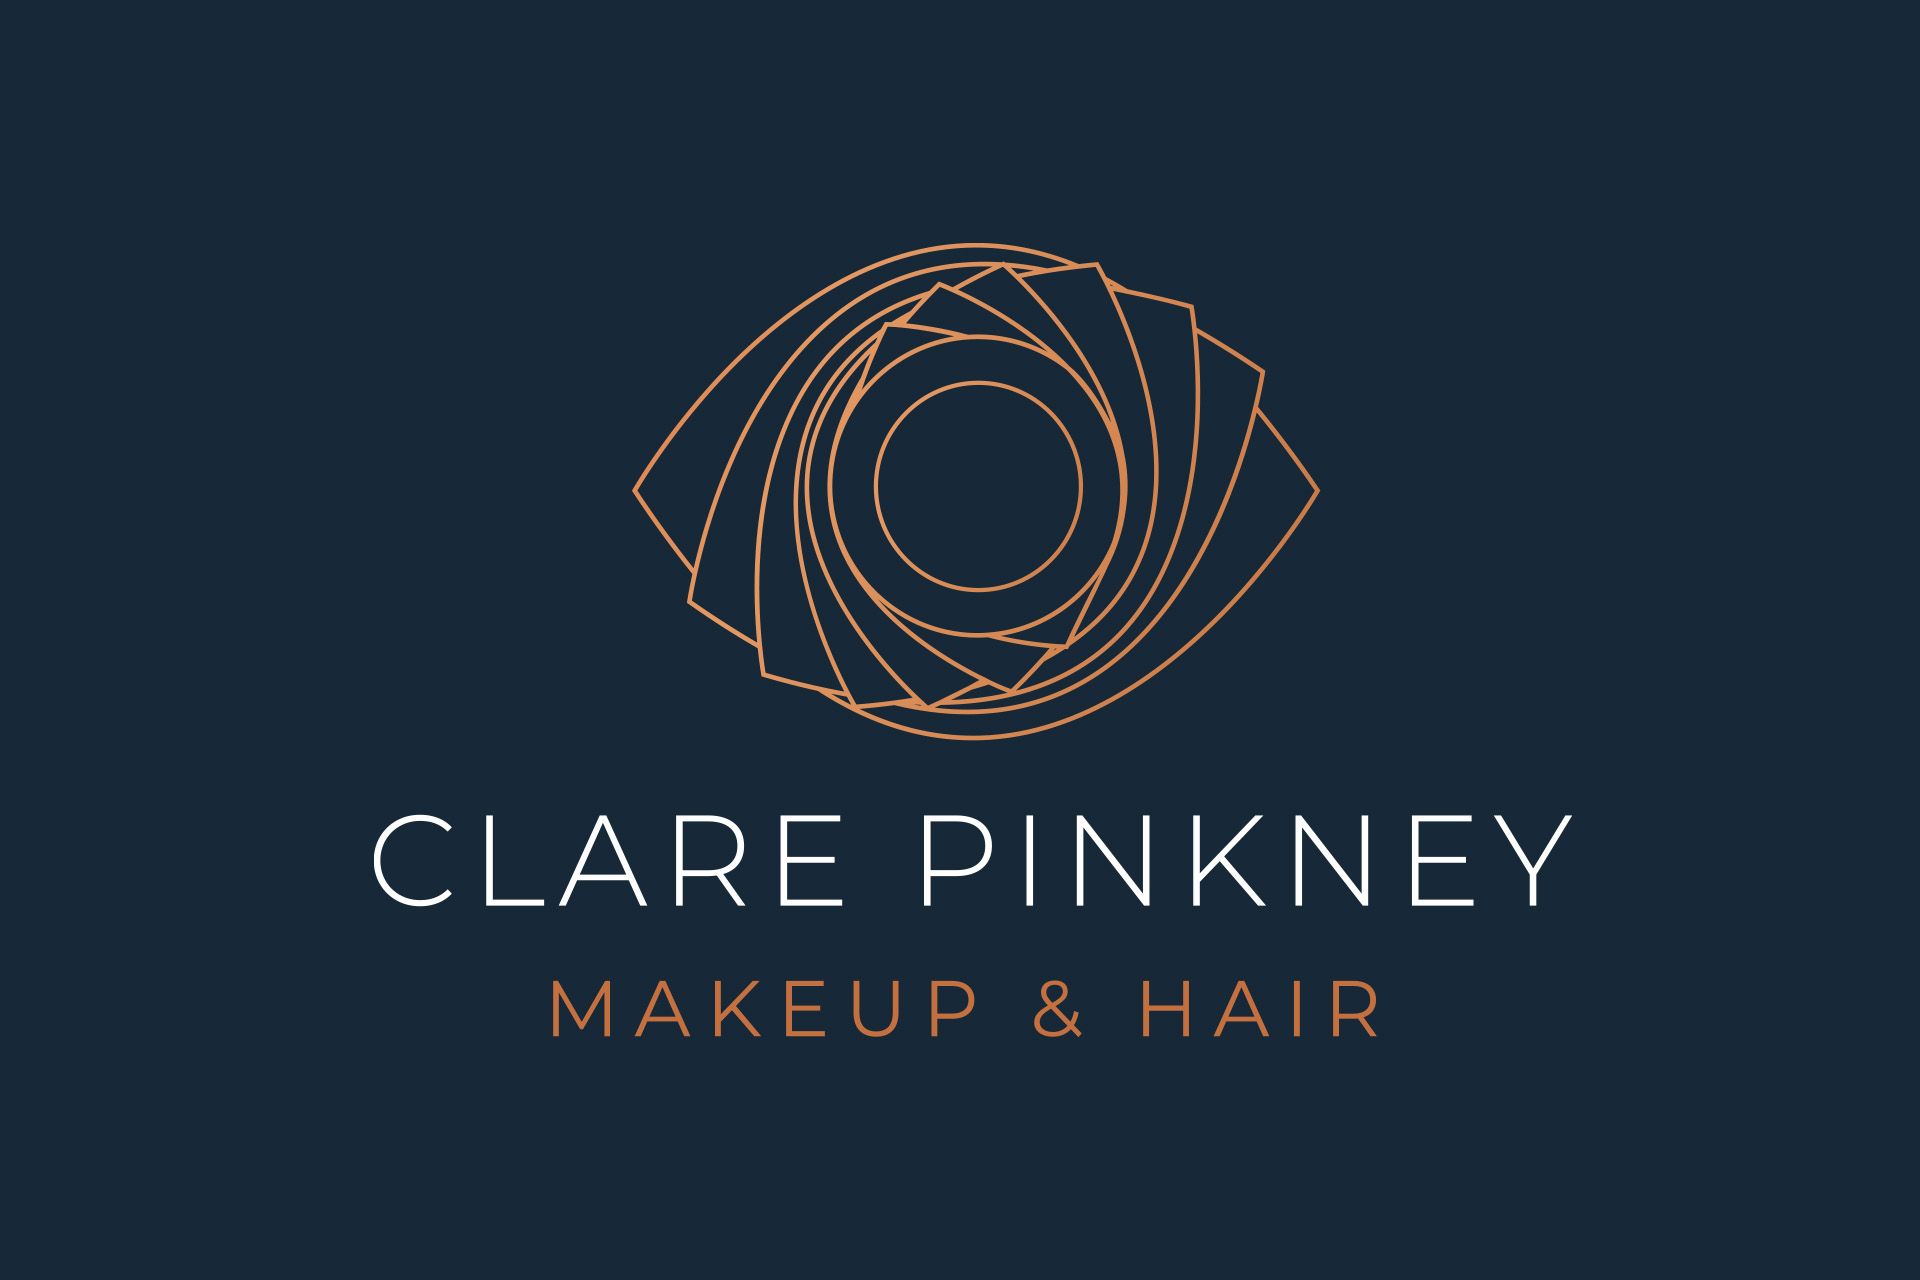 Clare Pinkney MUA logo design